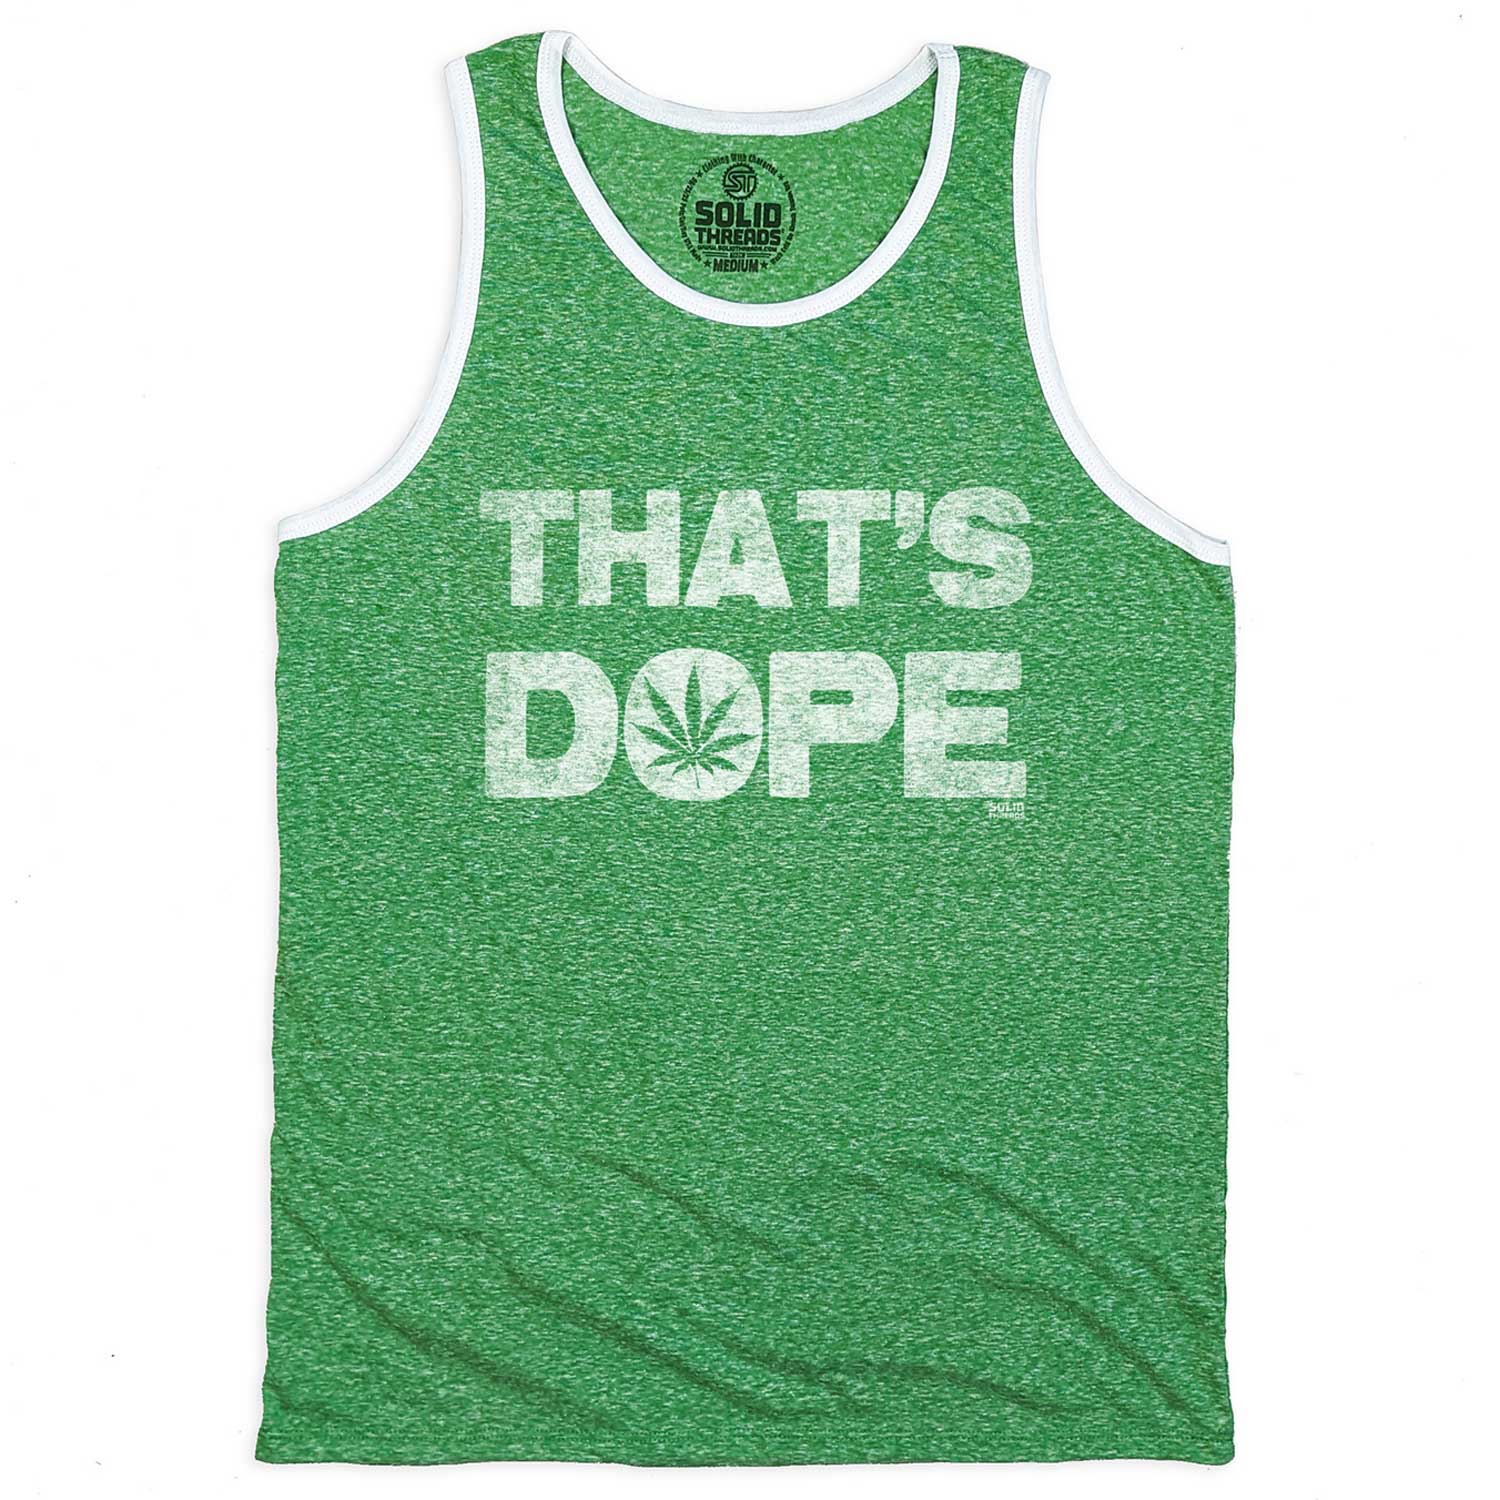 Men's That's Dope Vintage Graphic Tank Top | Retro Marijuana T-shirt | Solid Threads